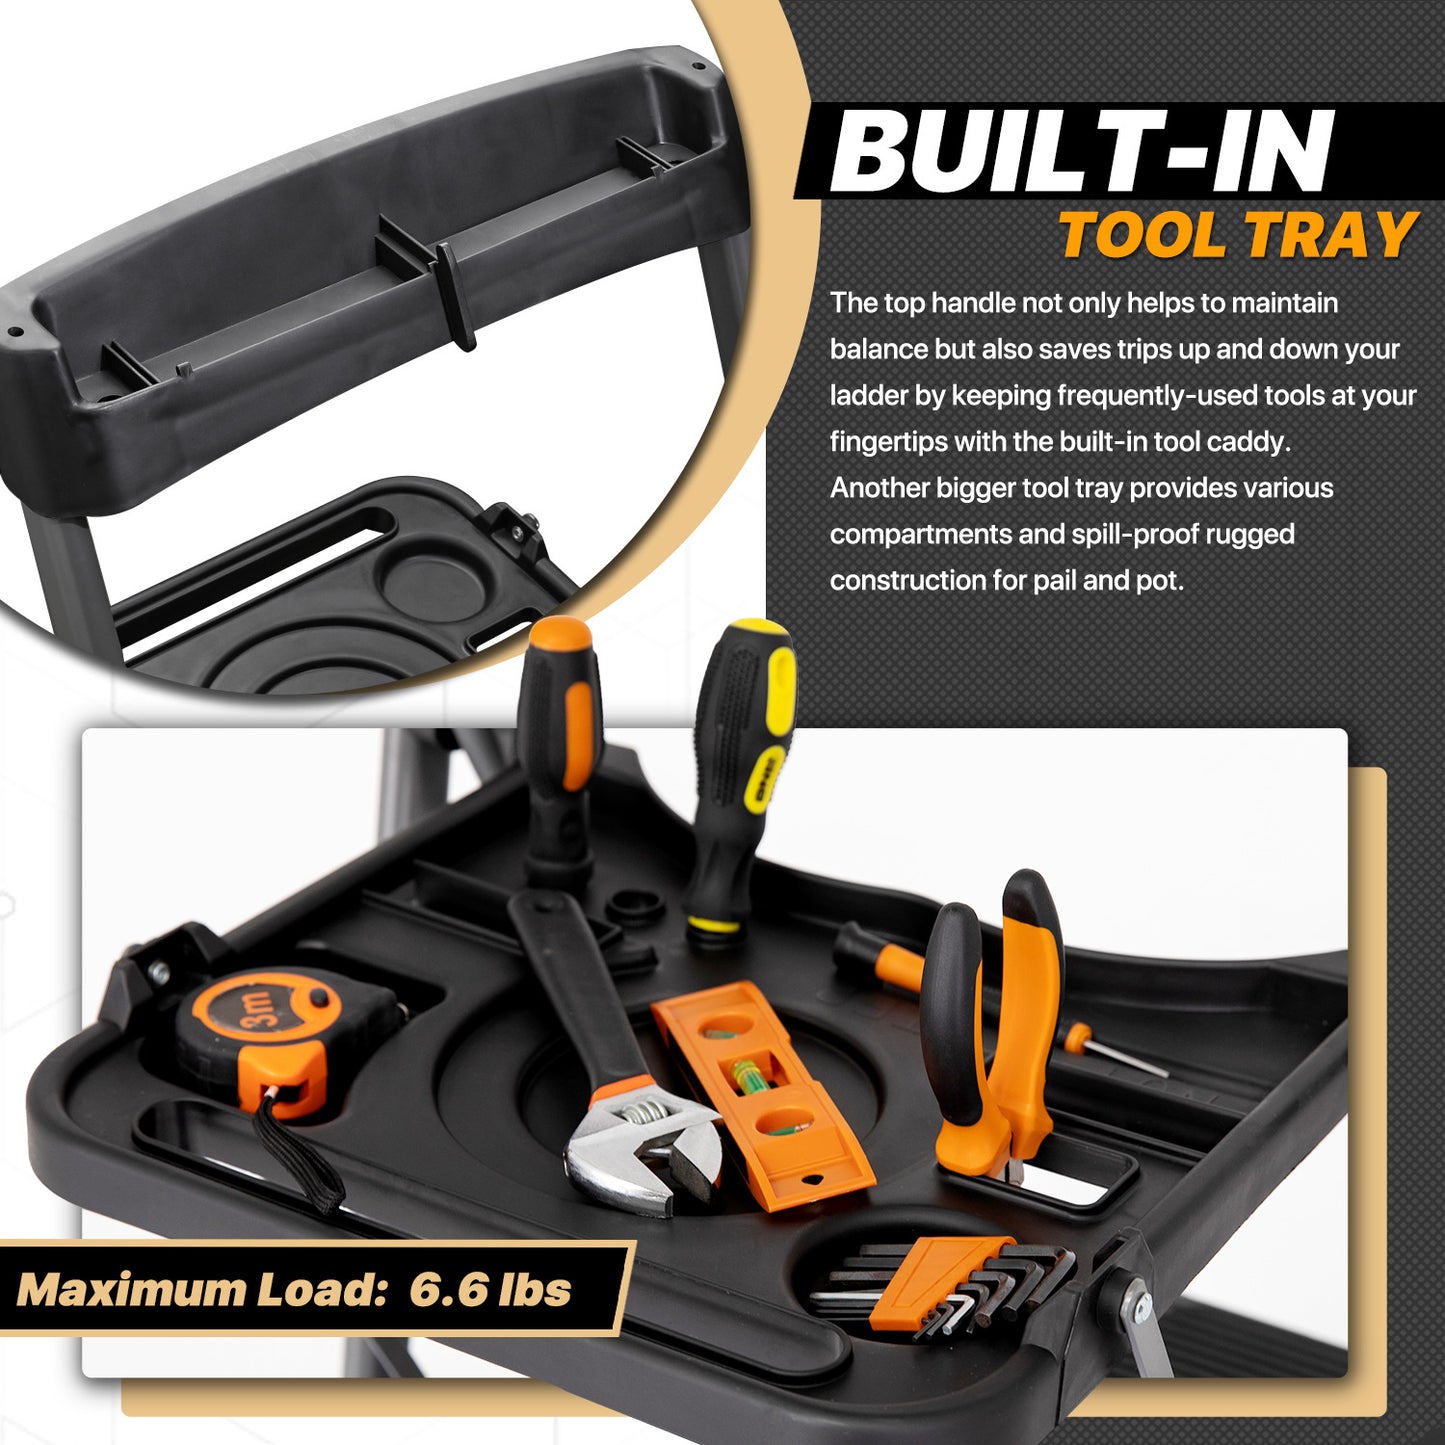 Tool Holder Handle Folding Step Ladder w/Tool Tray - 2 Steps 3.68 ft/44.1", Black